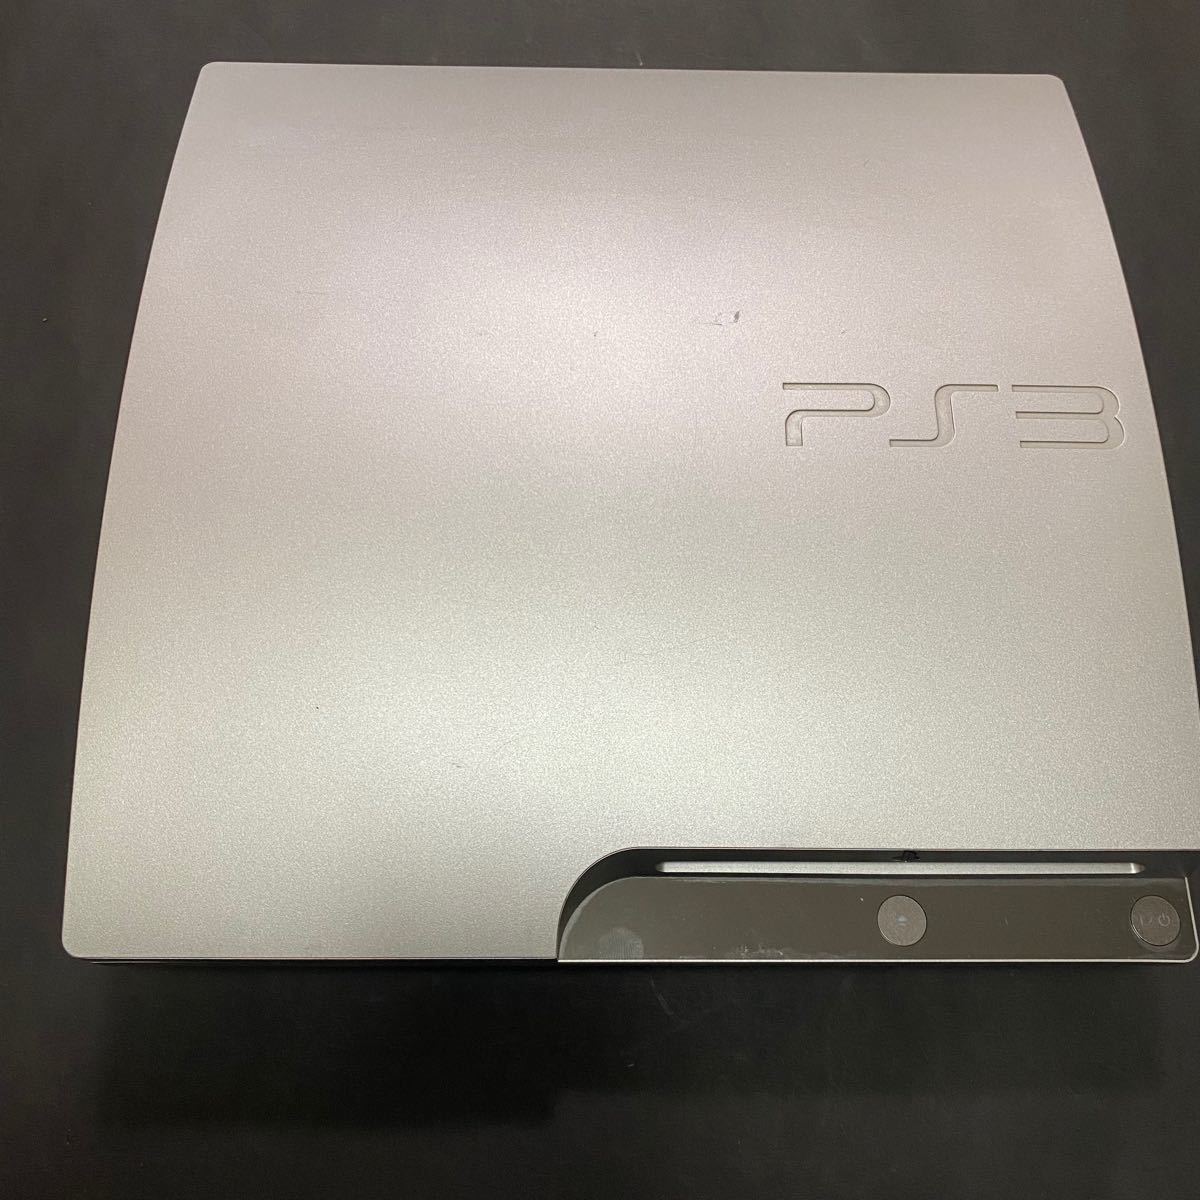 PlayStation3 PS3 cech-2500b 320GB シルバー